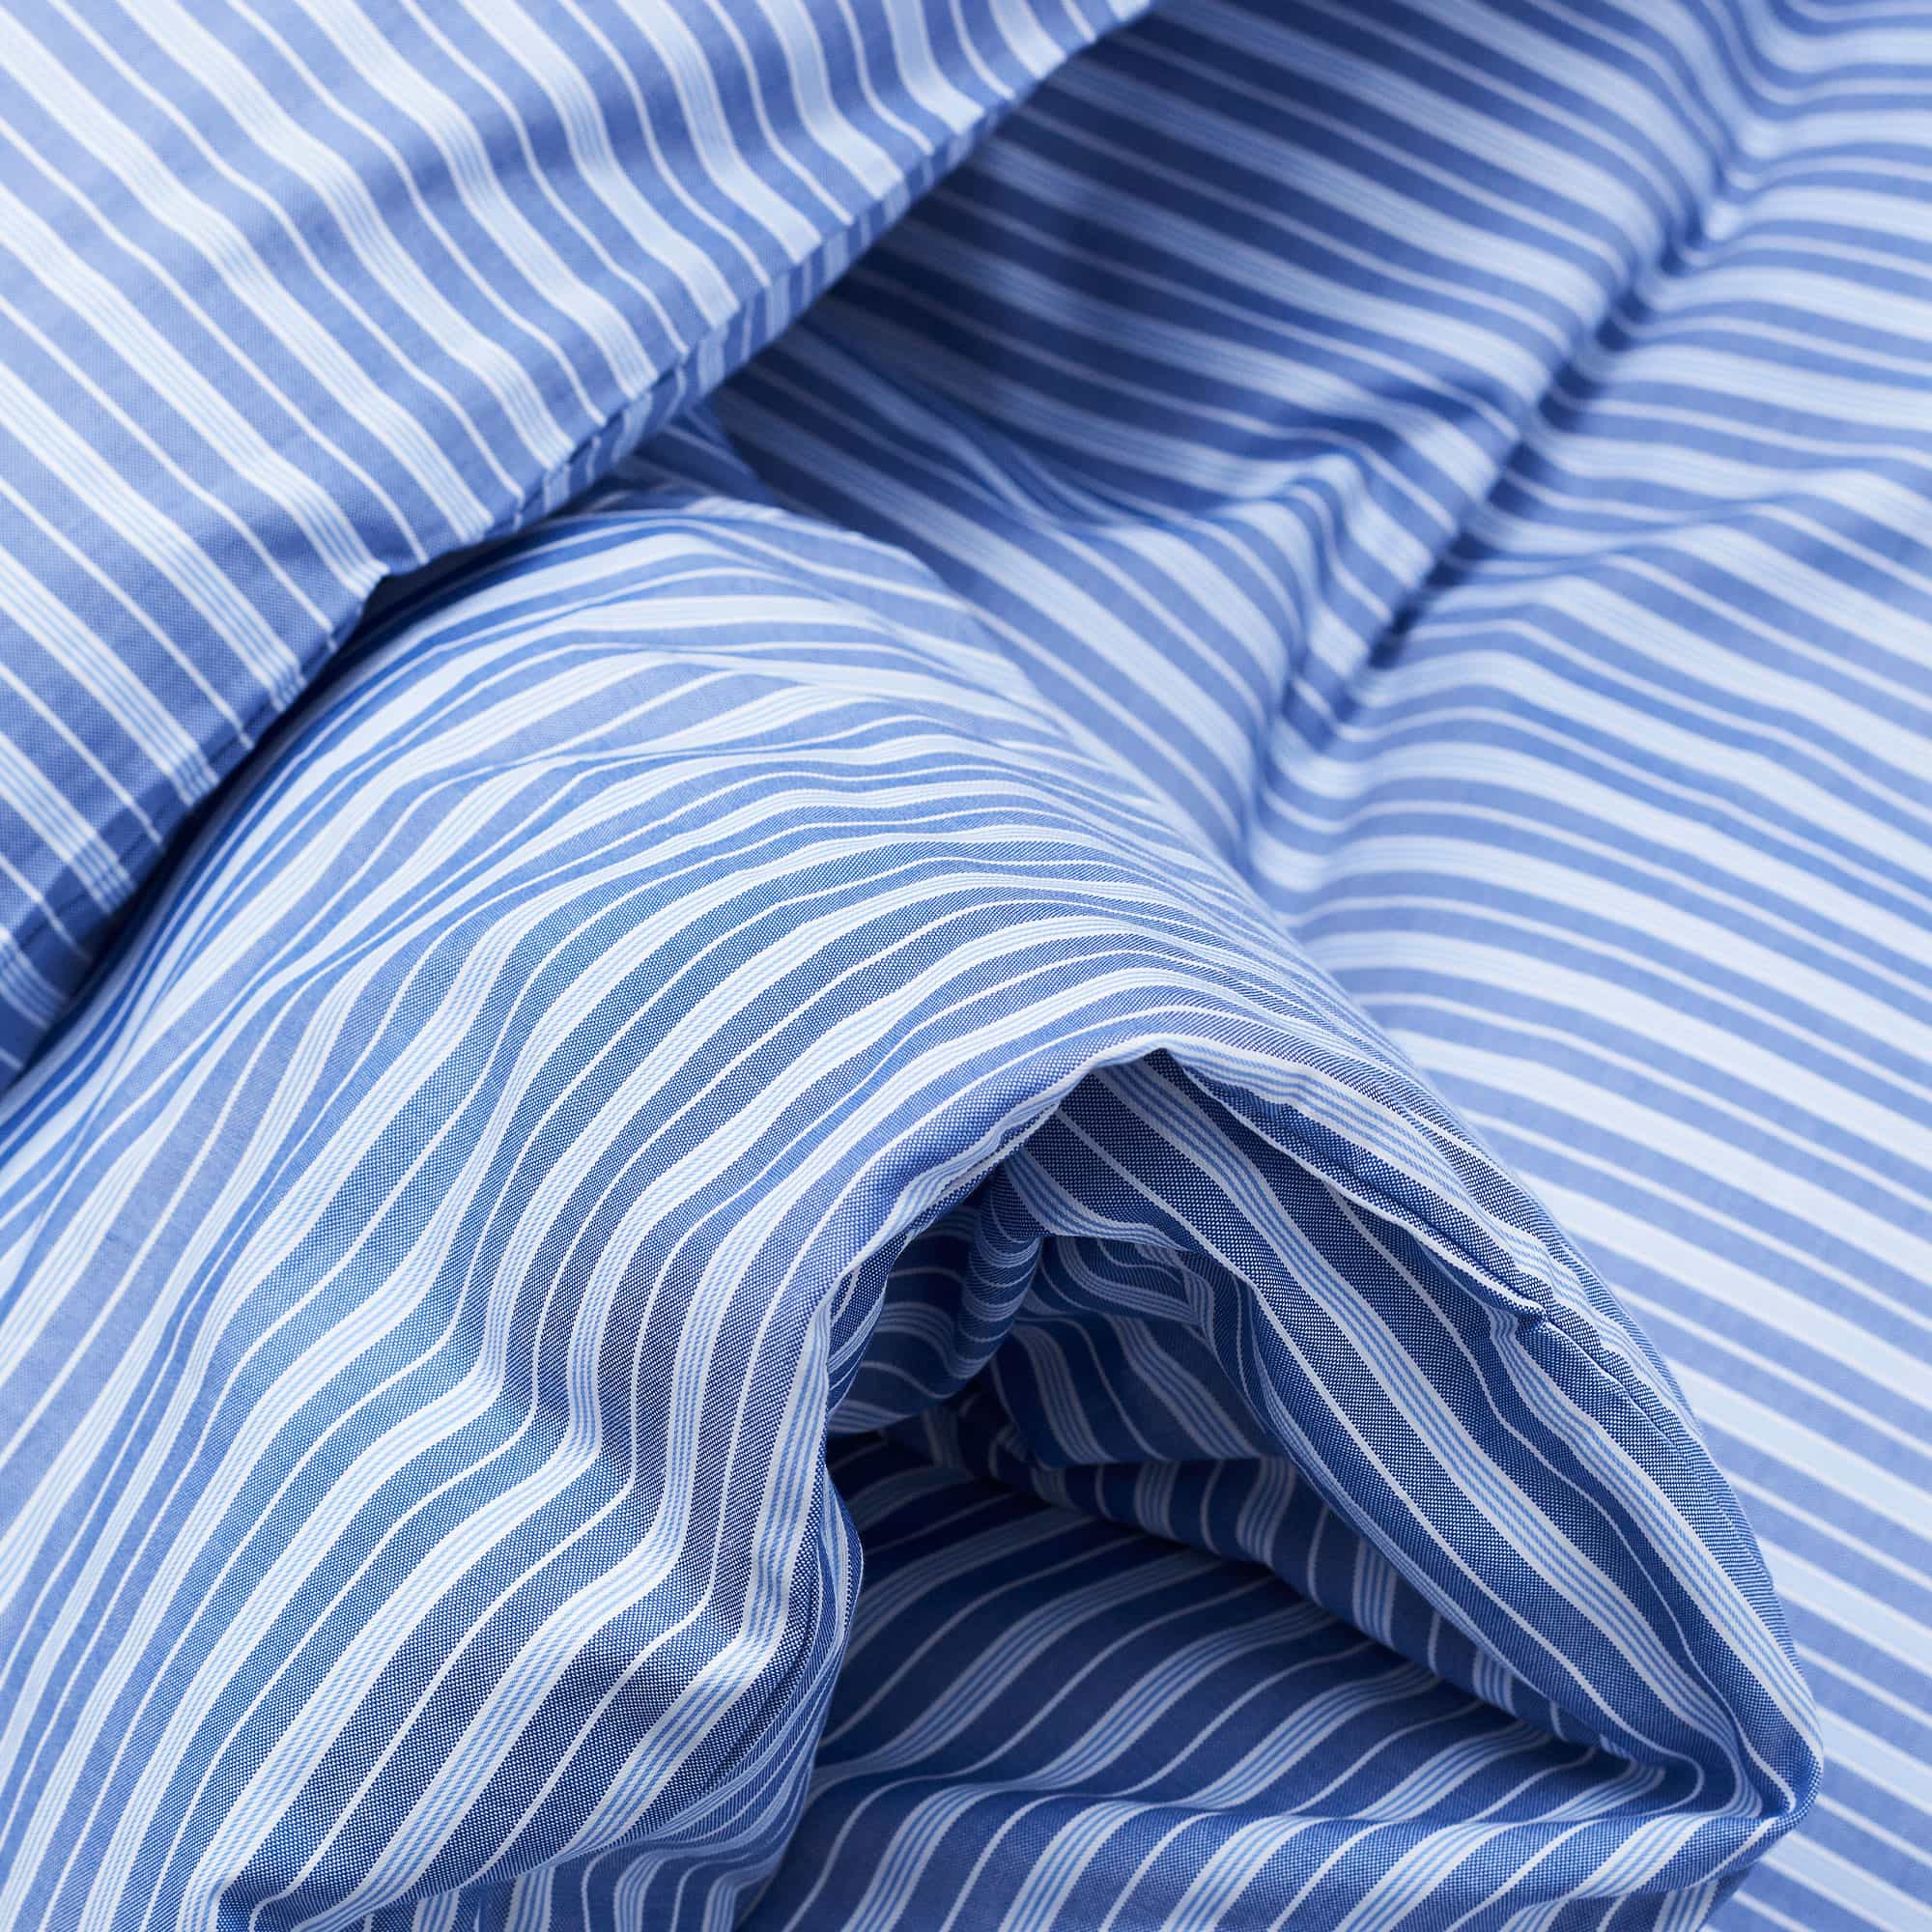 Wall Street Duvet Cover Oxford Stripe Medium Blue